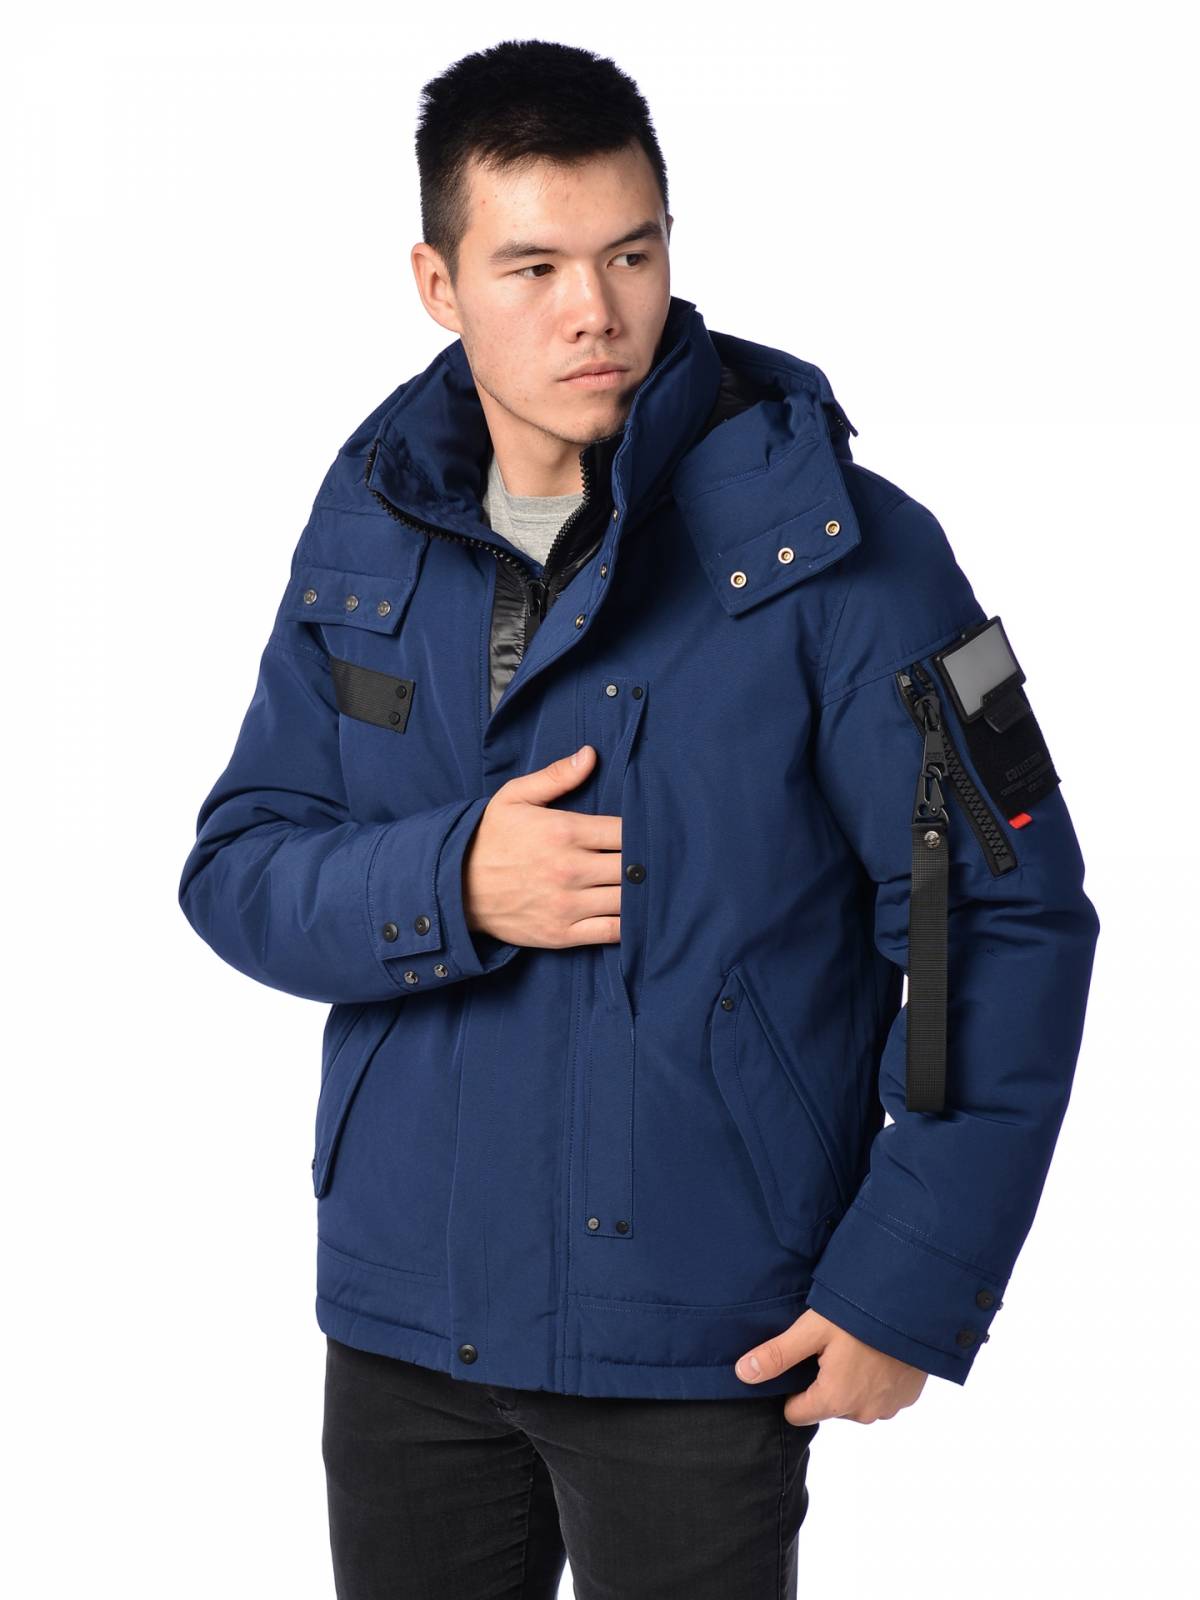 Зимняя куртка мужская Shark Force 3991 синяя 54 RU